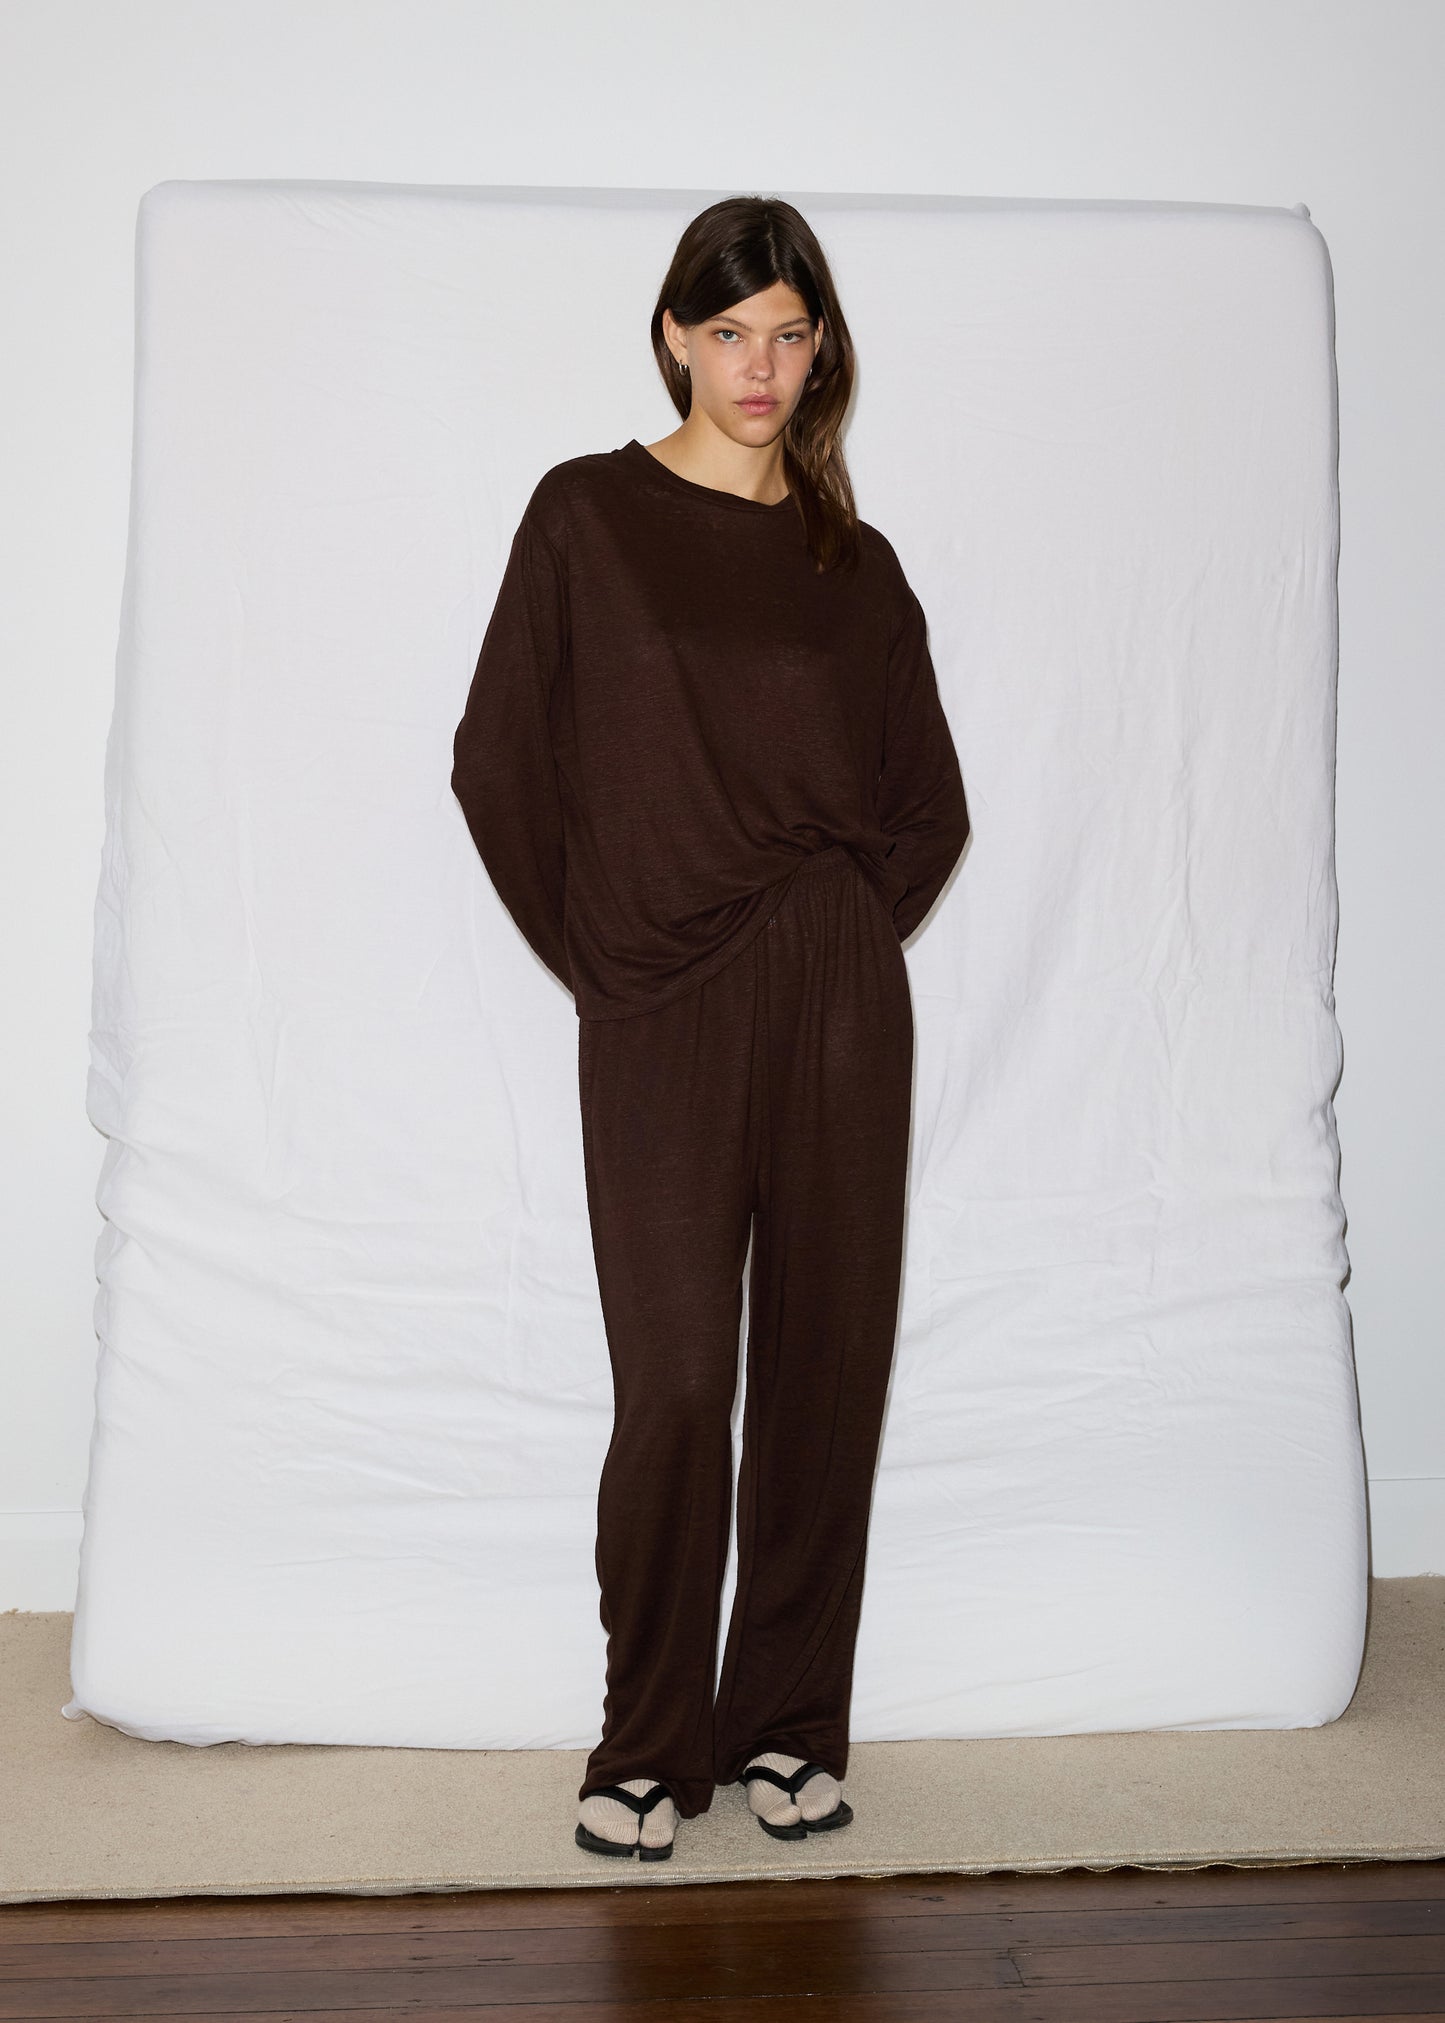 Female model wearing soft pant - chocolate by Deiji Studios against plain background